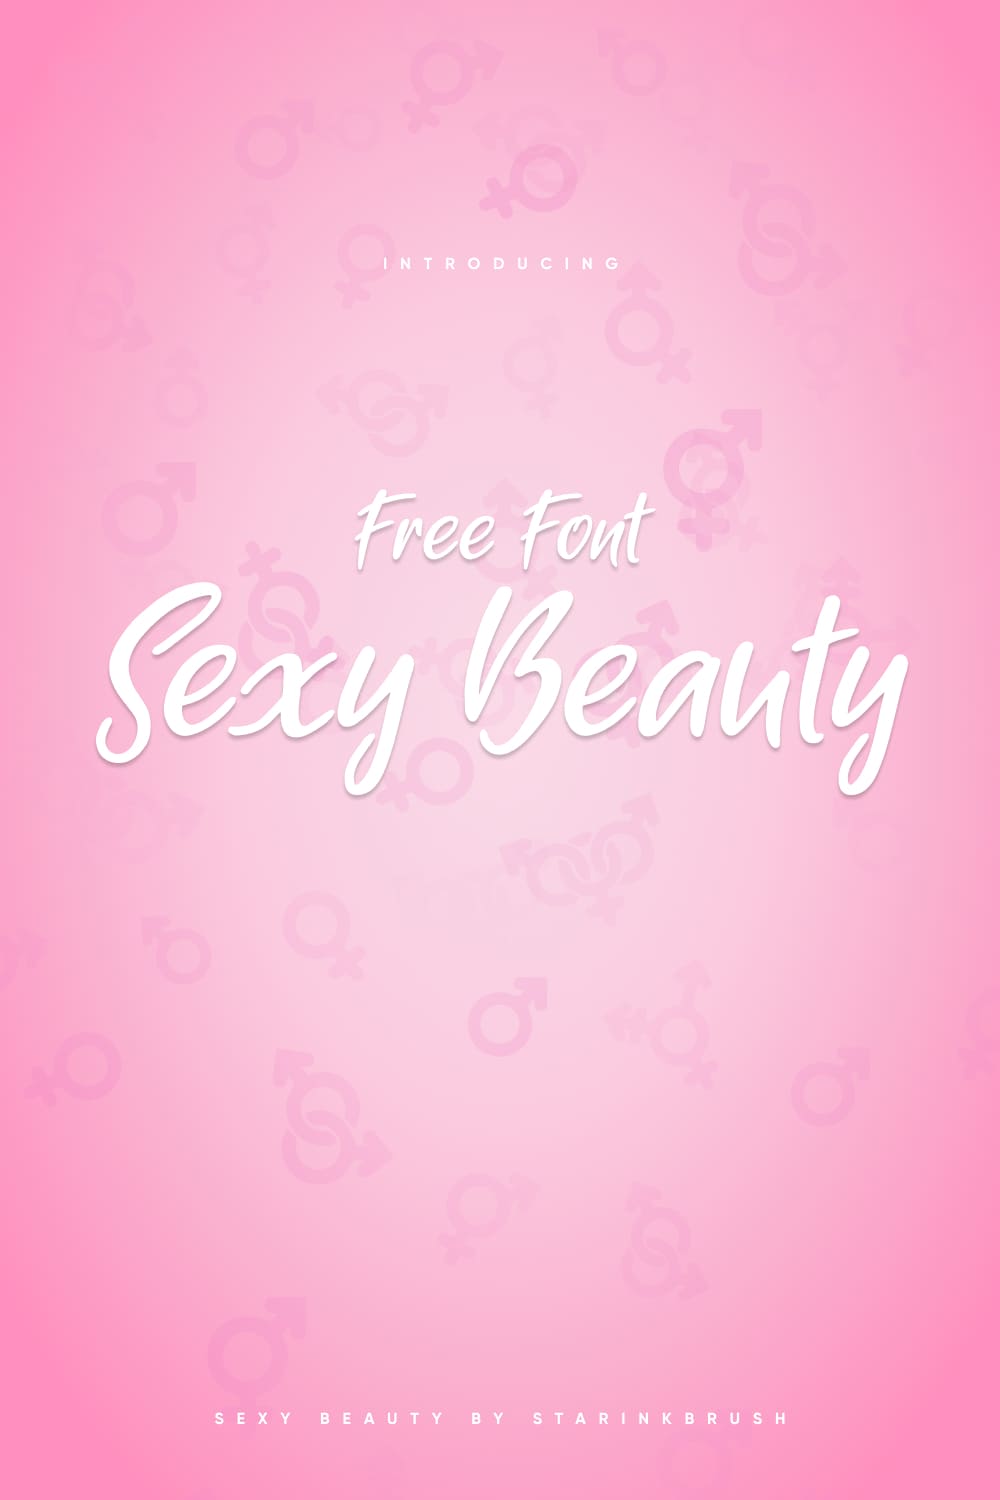 Sexy Beauty Free Font Beautiful Pink Pinterest Collage Image by MasterBundles.